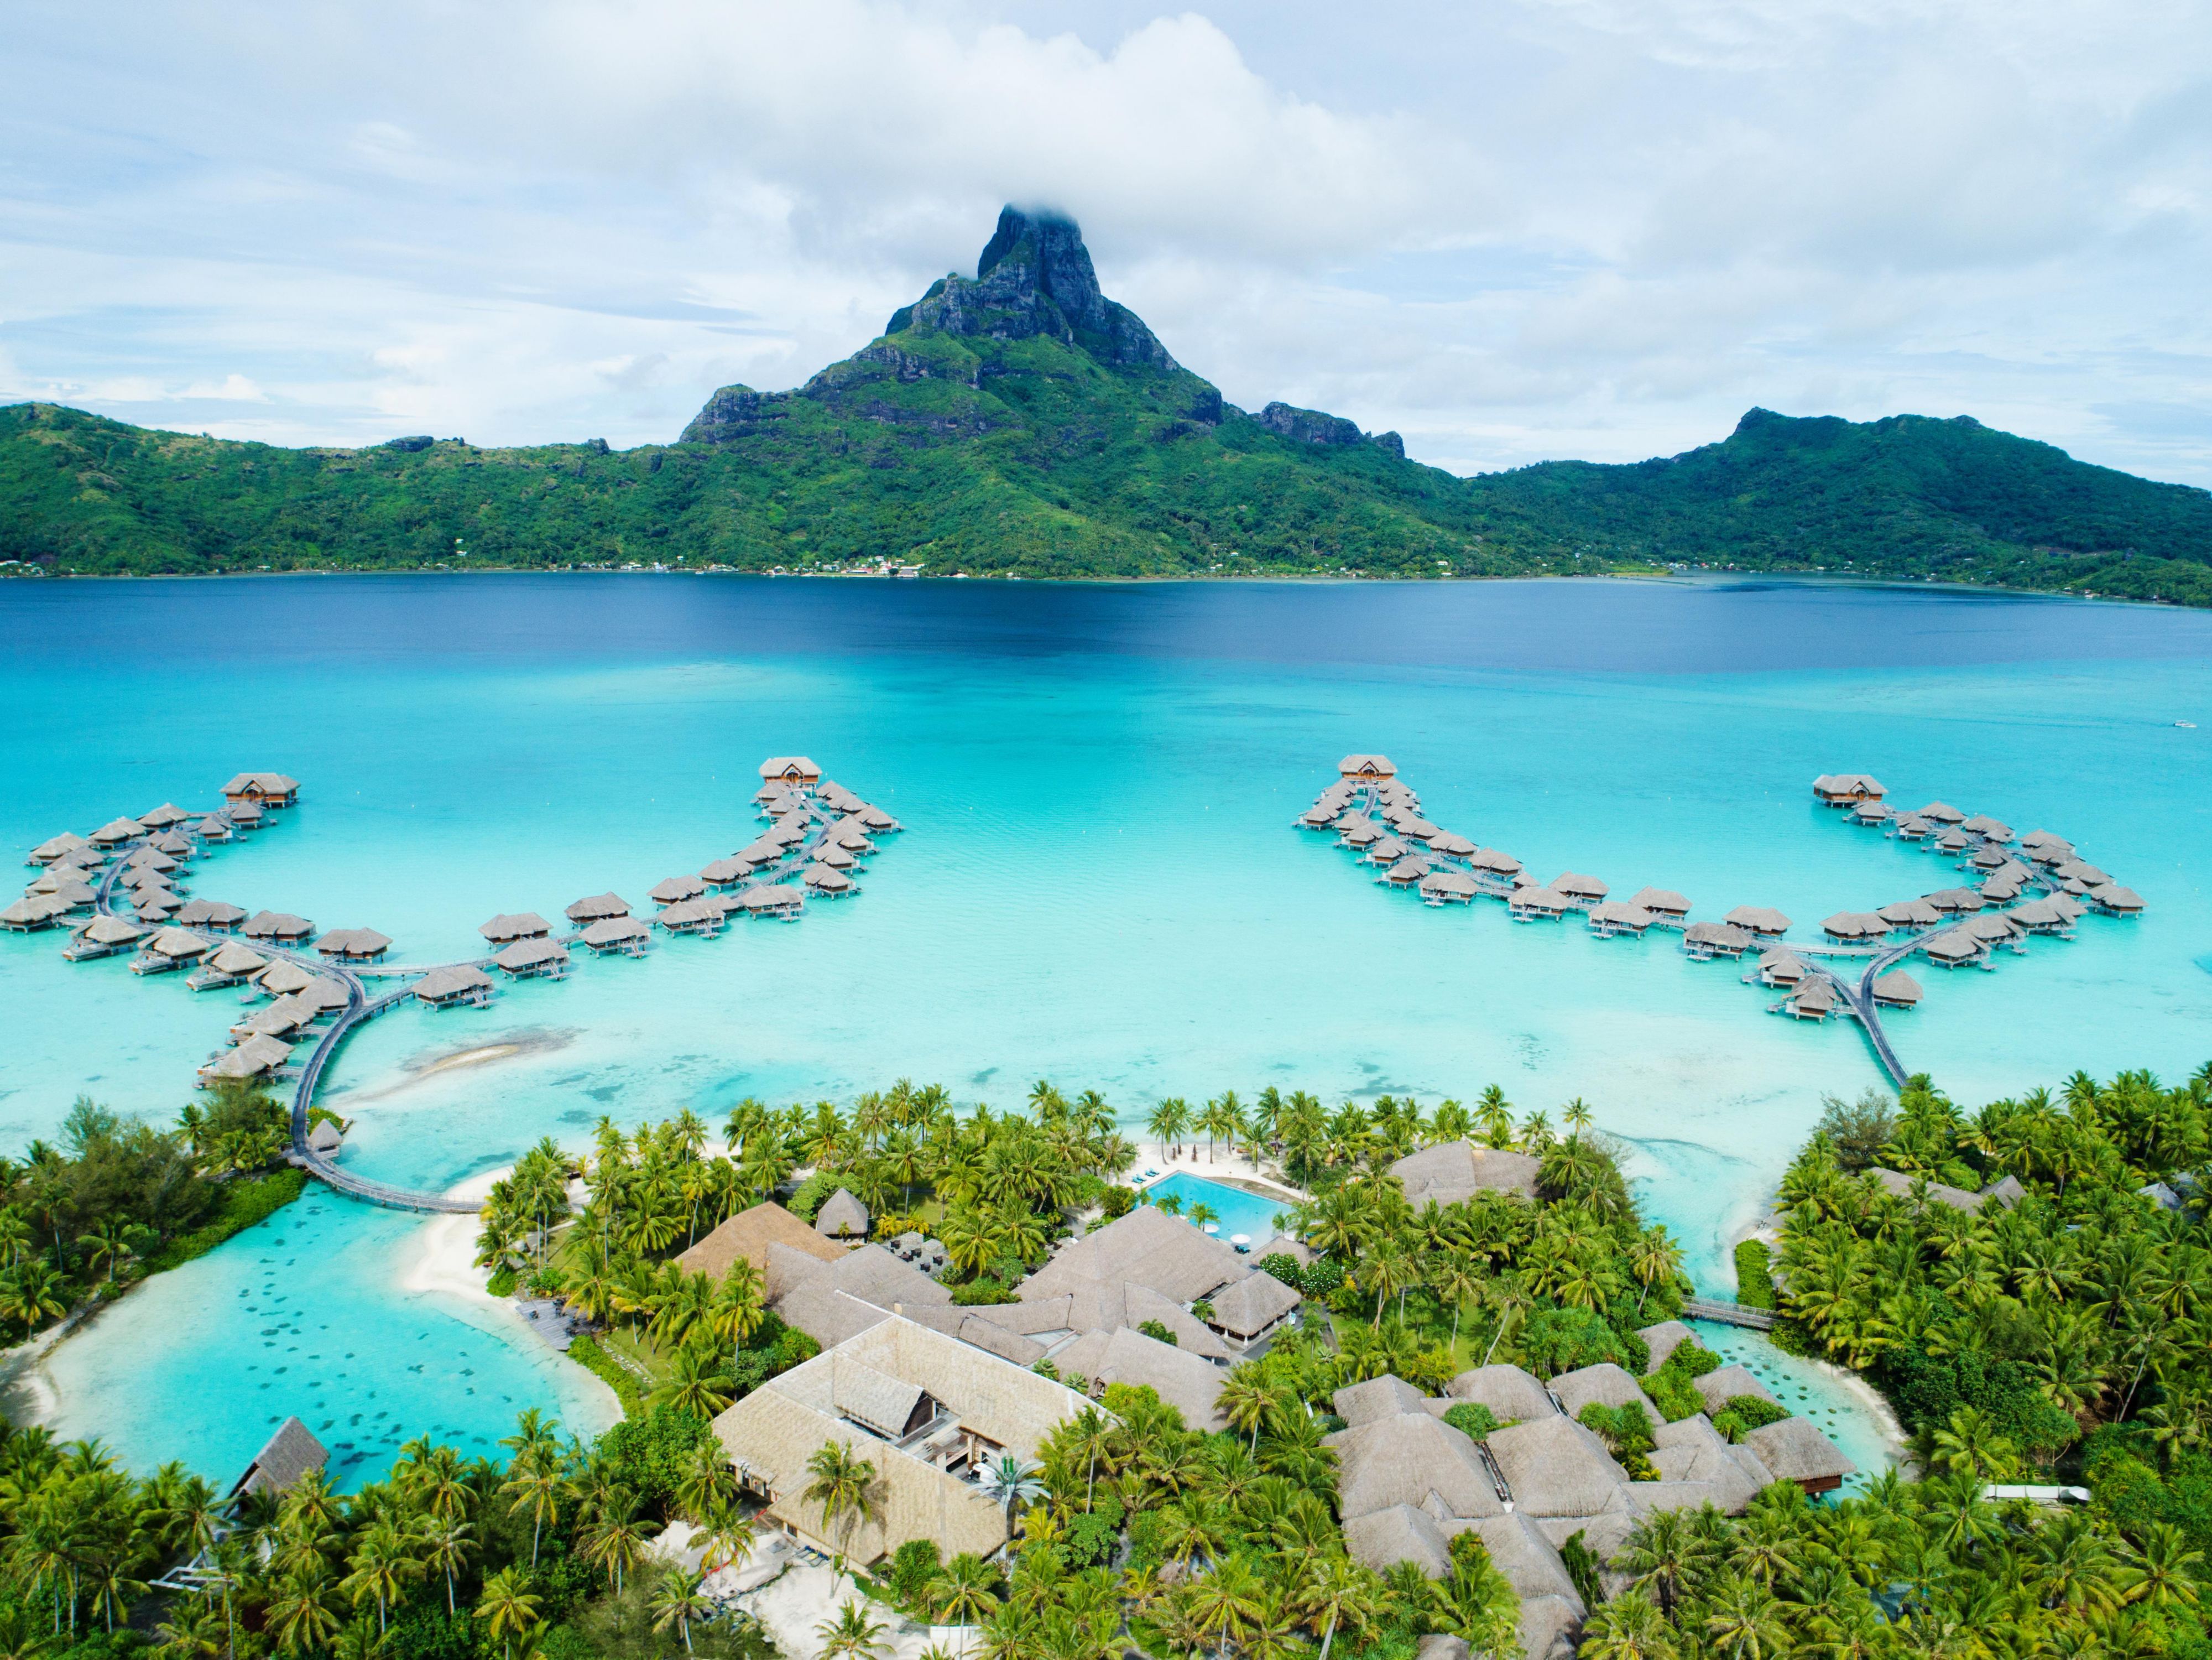 View of resort and beach in Bora Bora